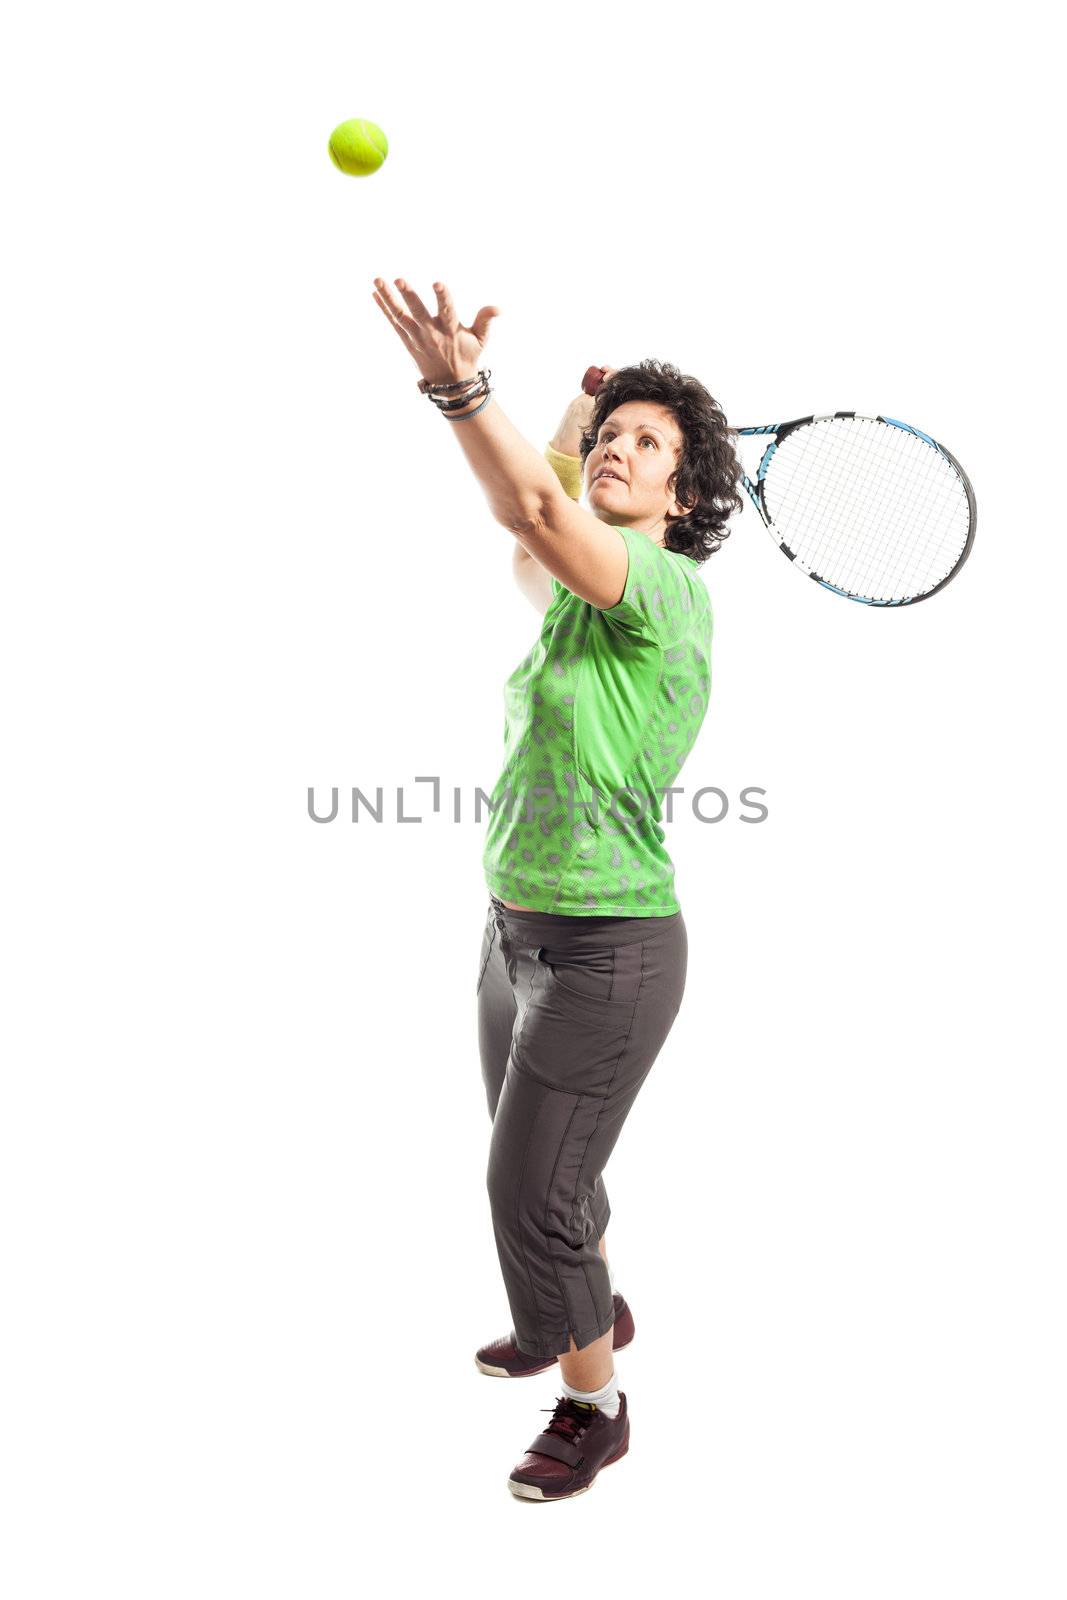 Tennis player by kokimk